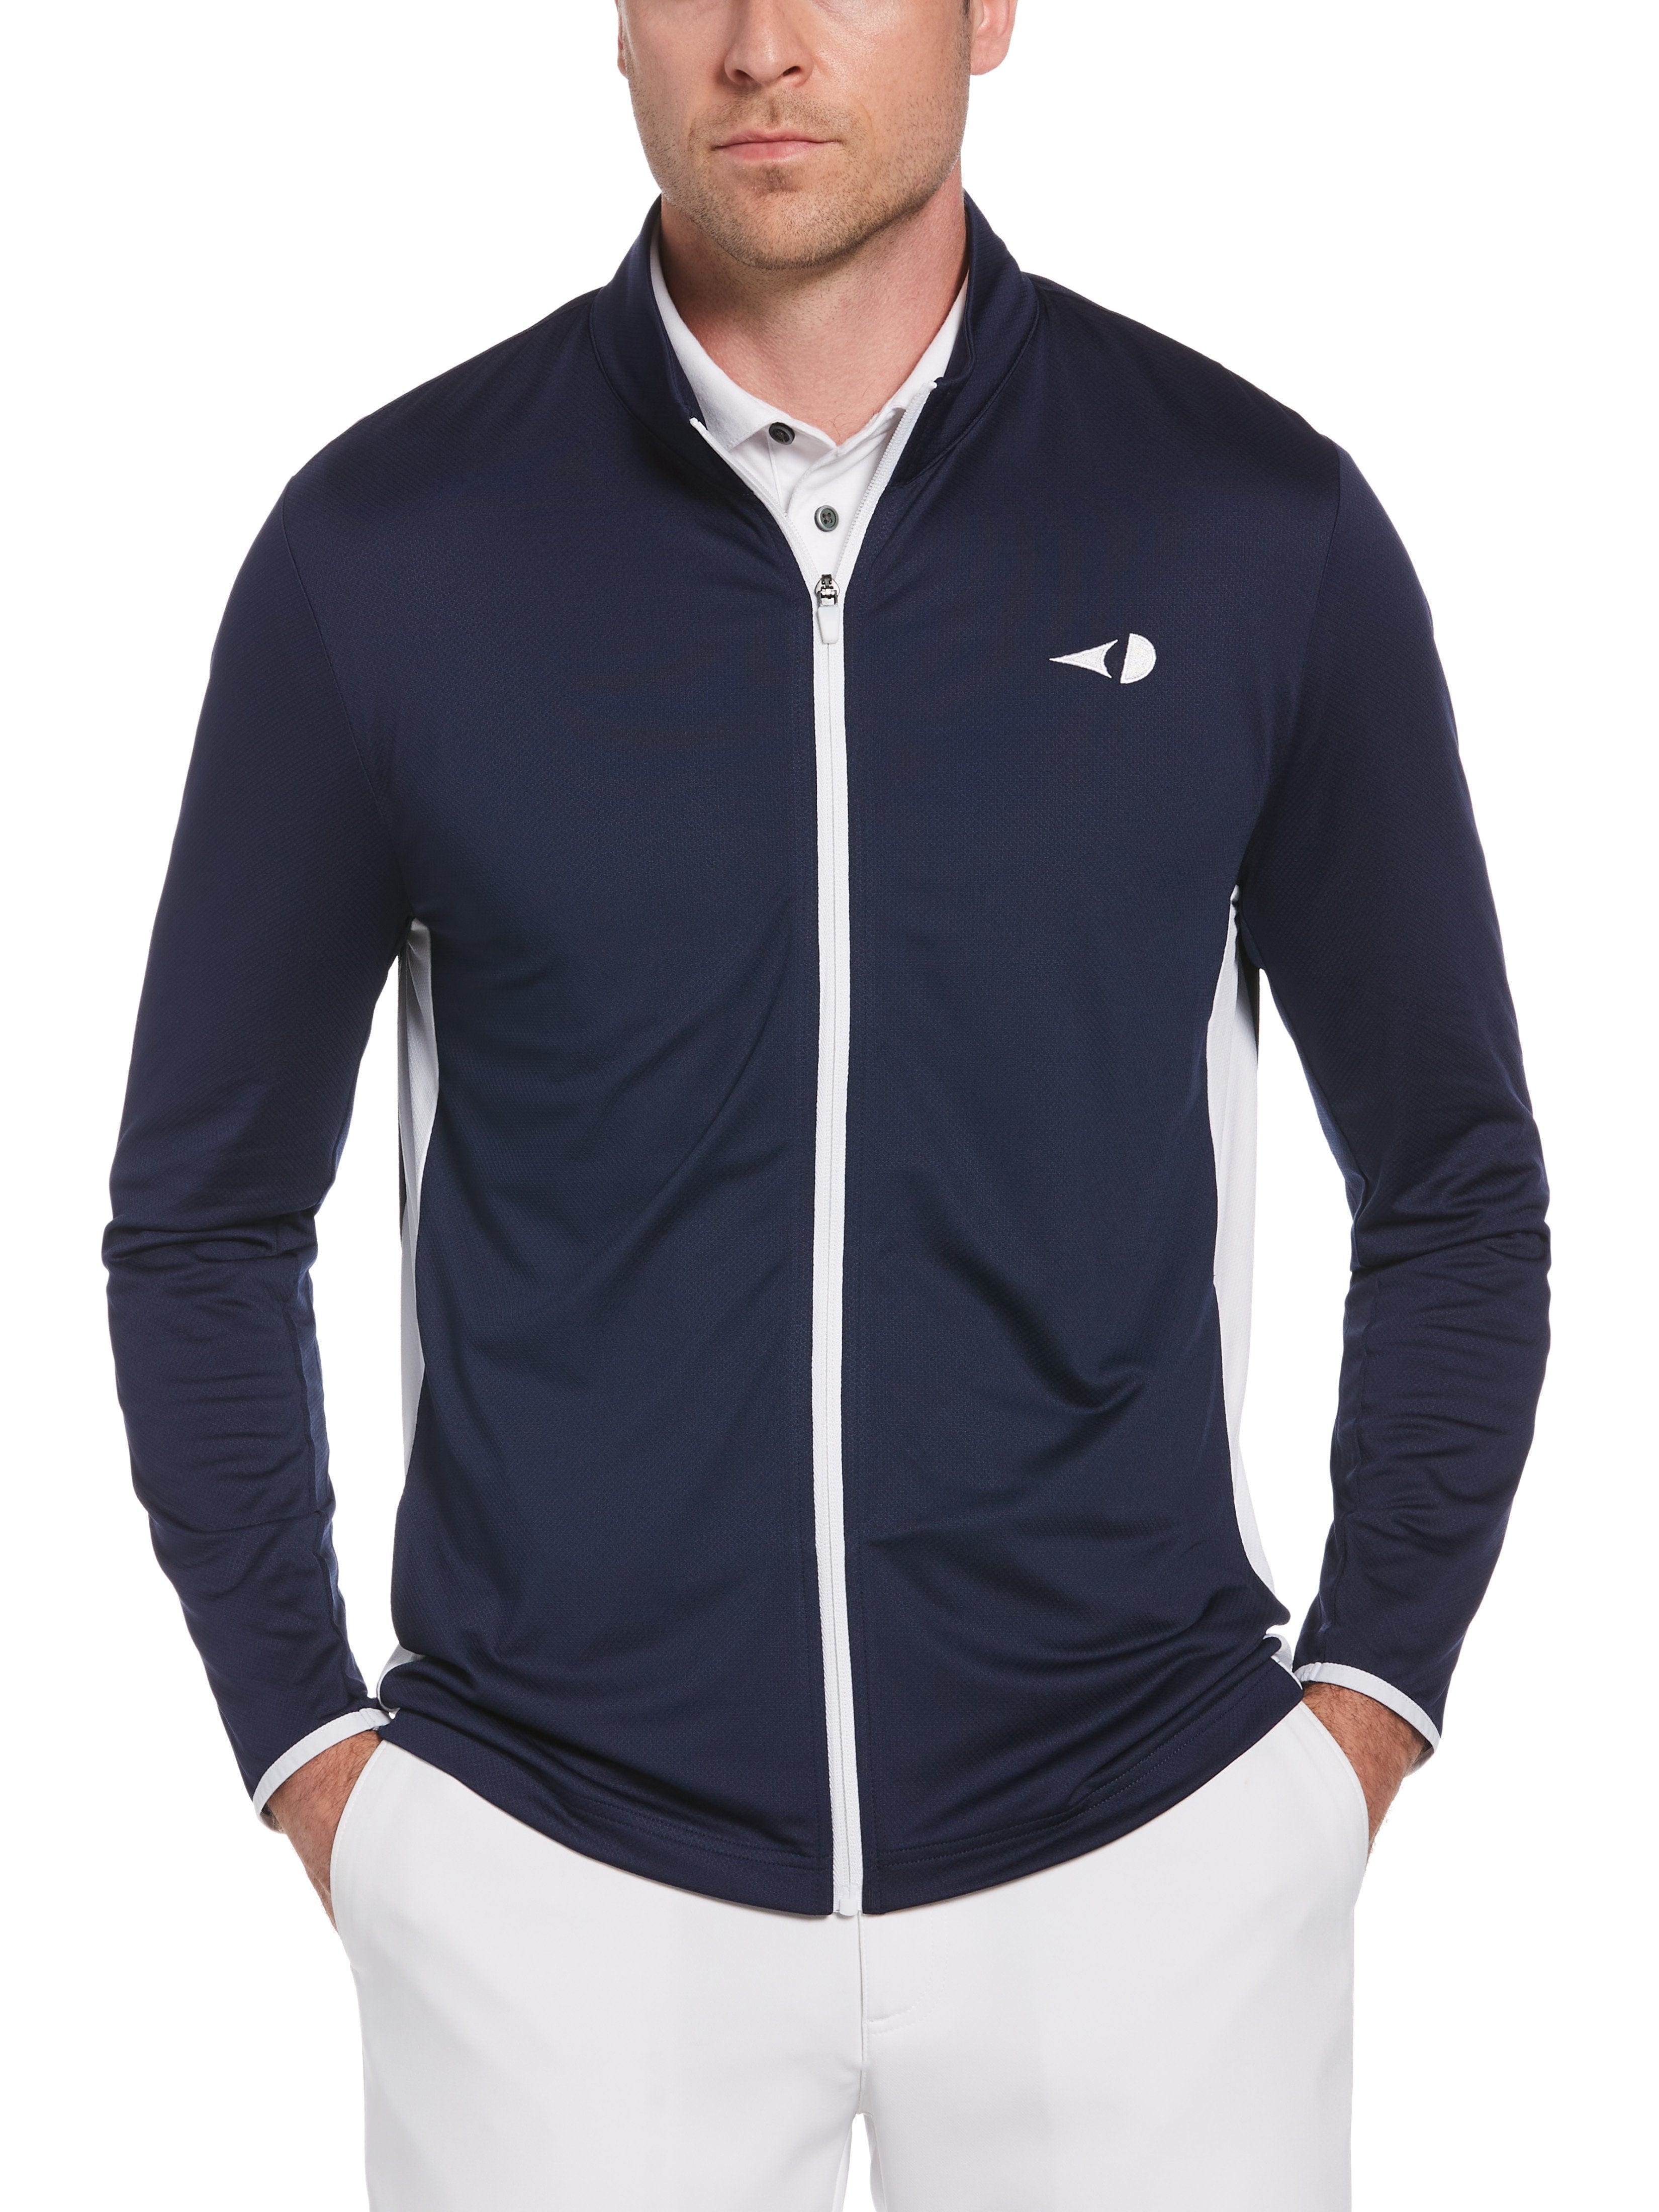 Grand Slam Mens Lightweight Full Zip Base Layer Jacket Top, Size Large, Navy Blue, Polyester/Elastane | Golf Apparel Shop